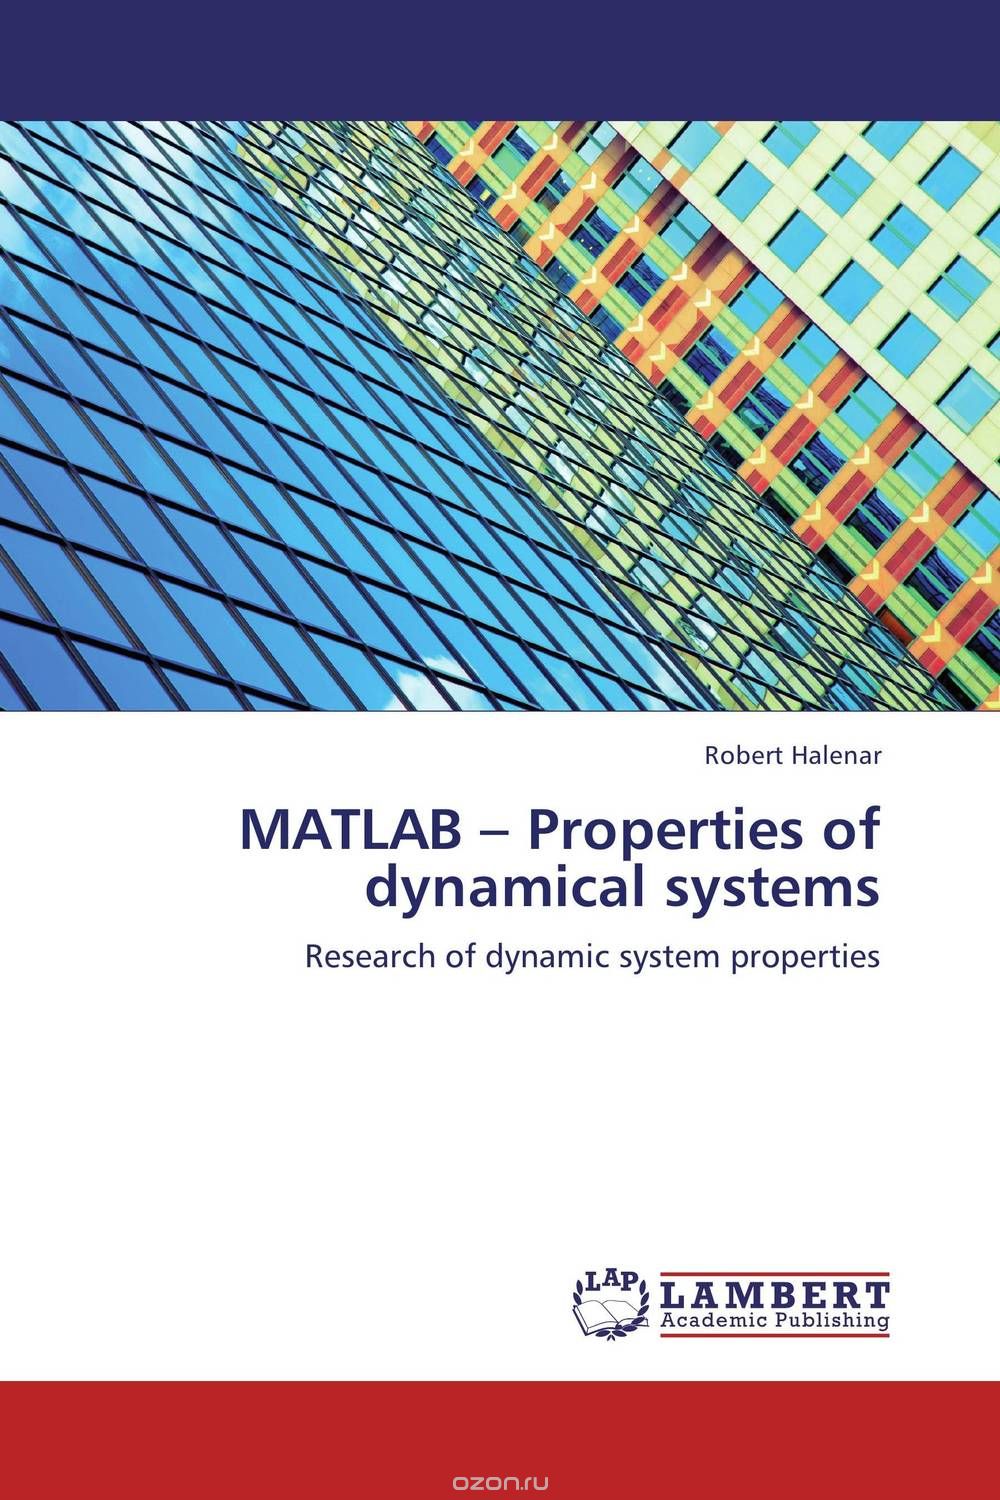 Скачать книгу "MATLAB – Properties of dynamical systems"